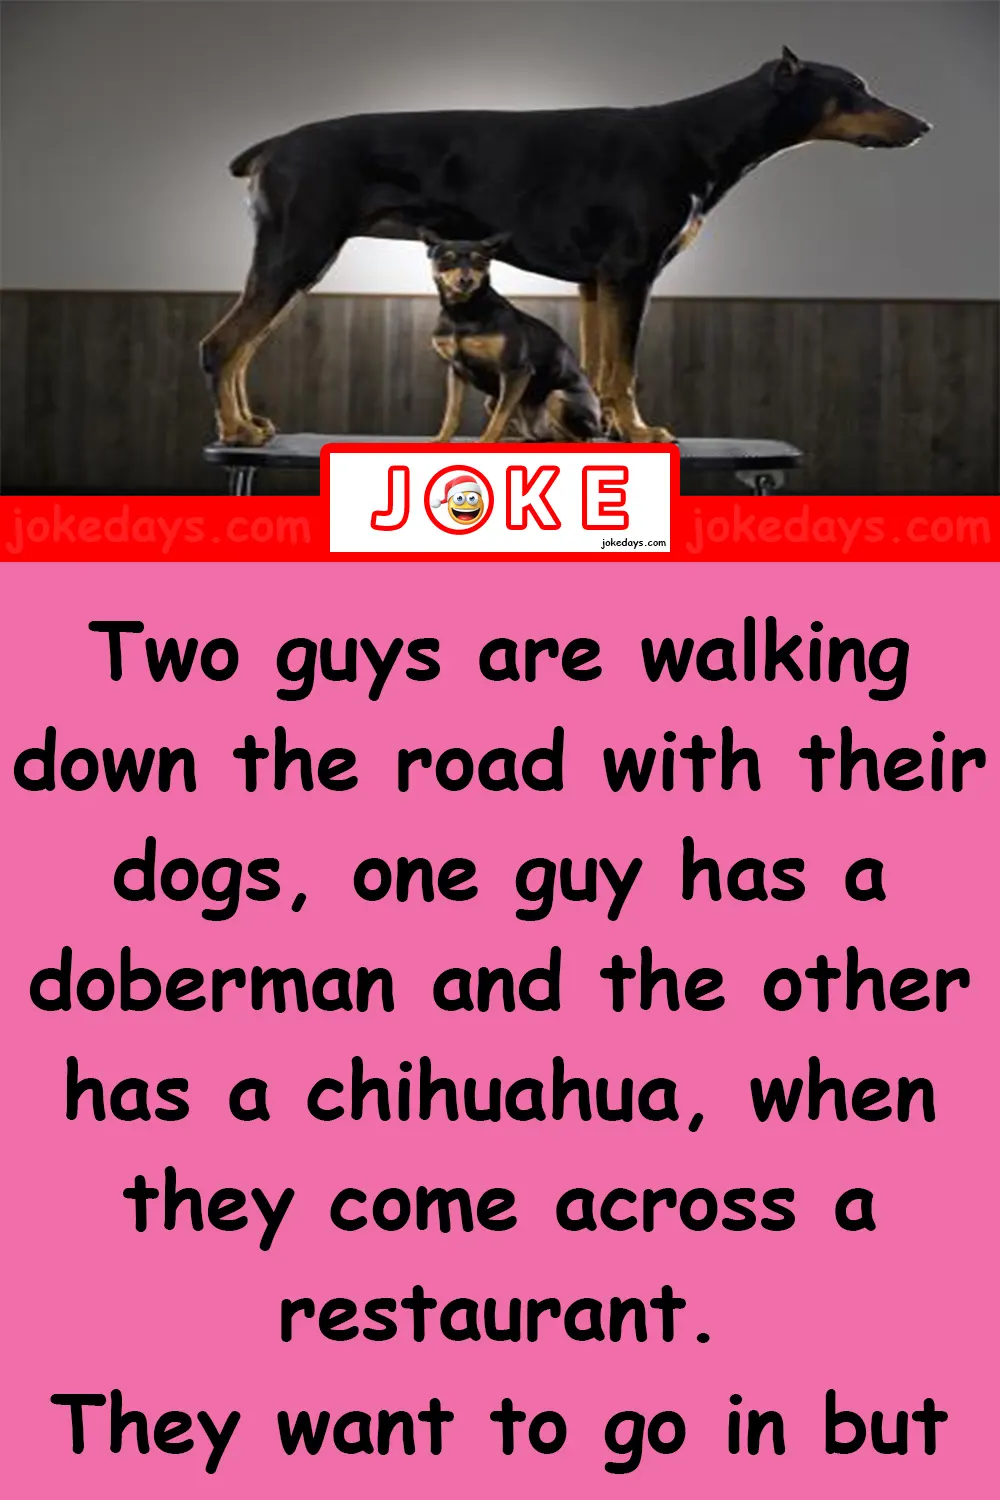 Doberman and Chihuahua